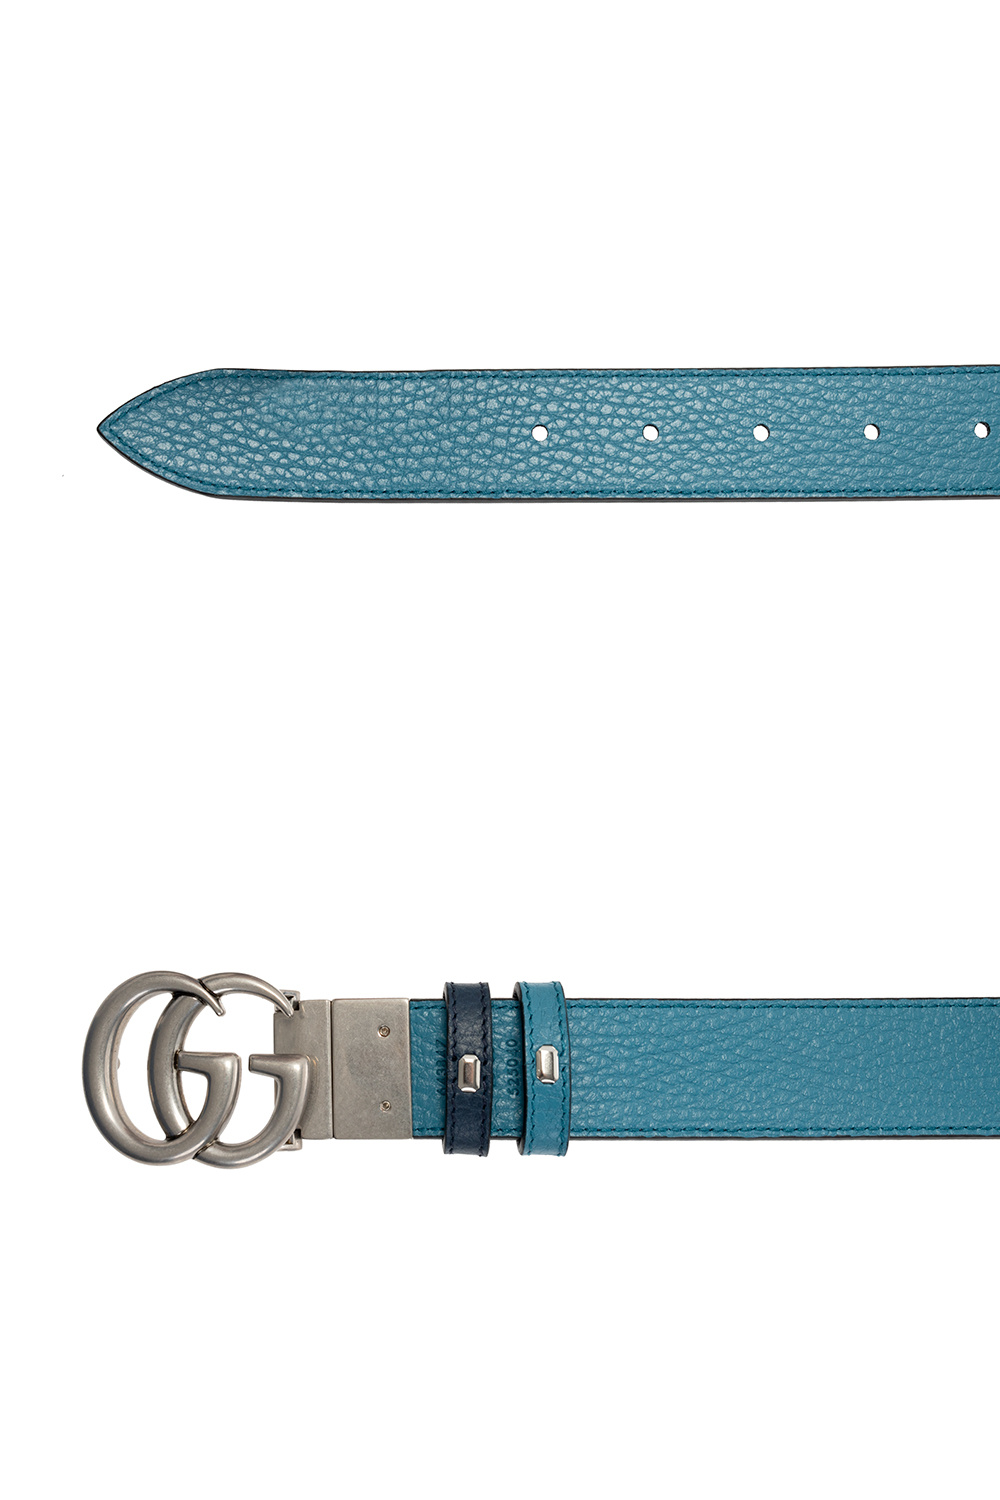 Gucci GG Reversible Leather Belt Blue/Black Size 90.36